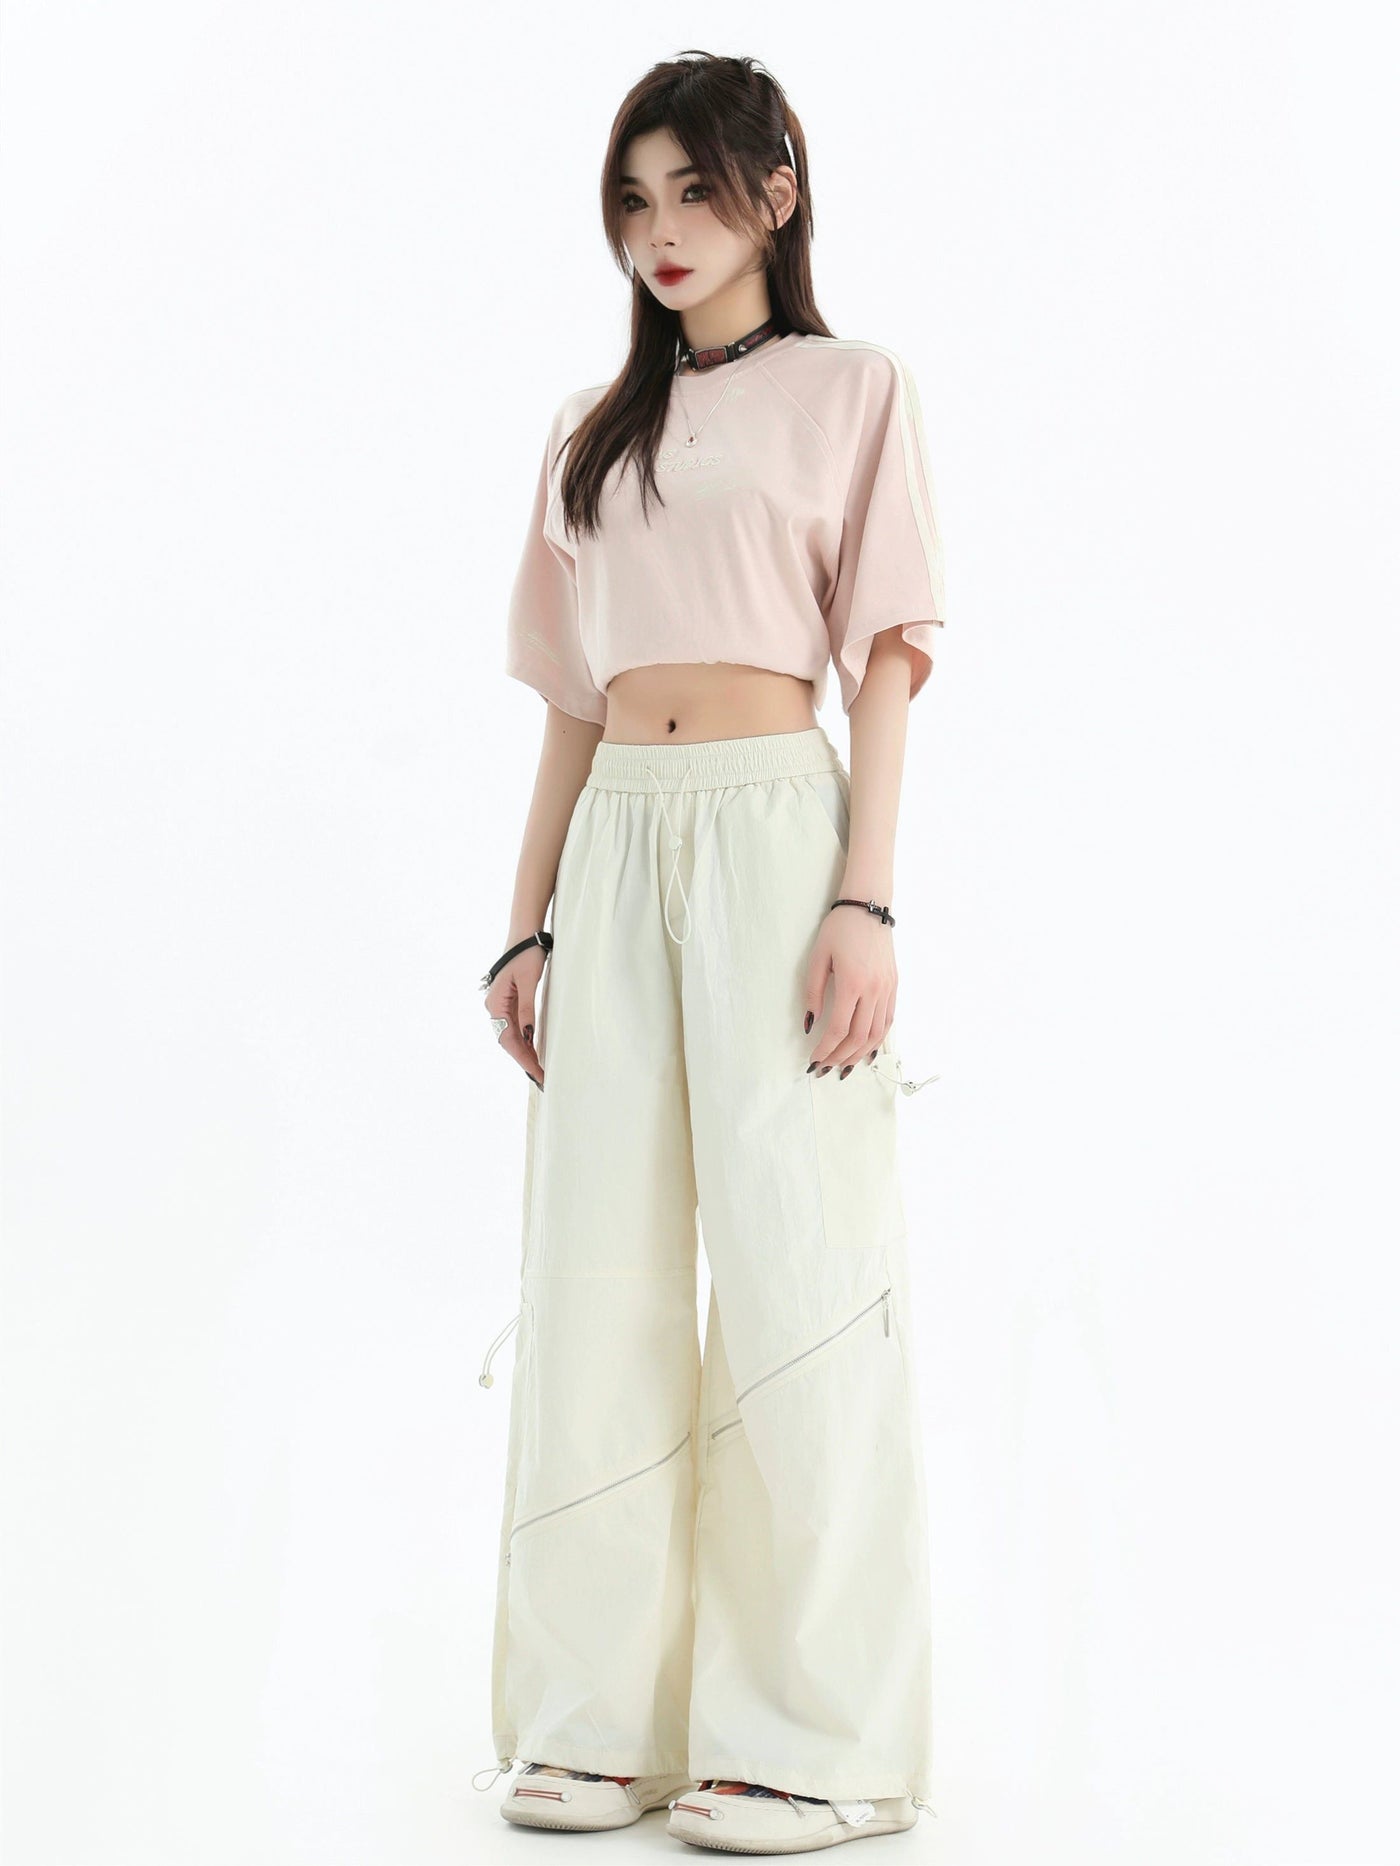 Drawstring Zipper Details Track Pants Korean Street Fashion Pants By INS Korea Shop Online at OH Vault